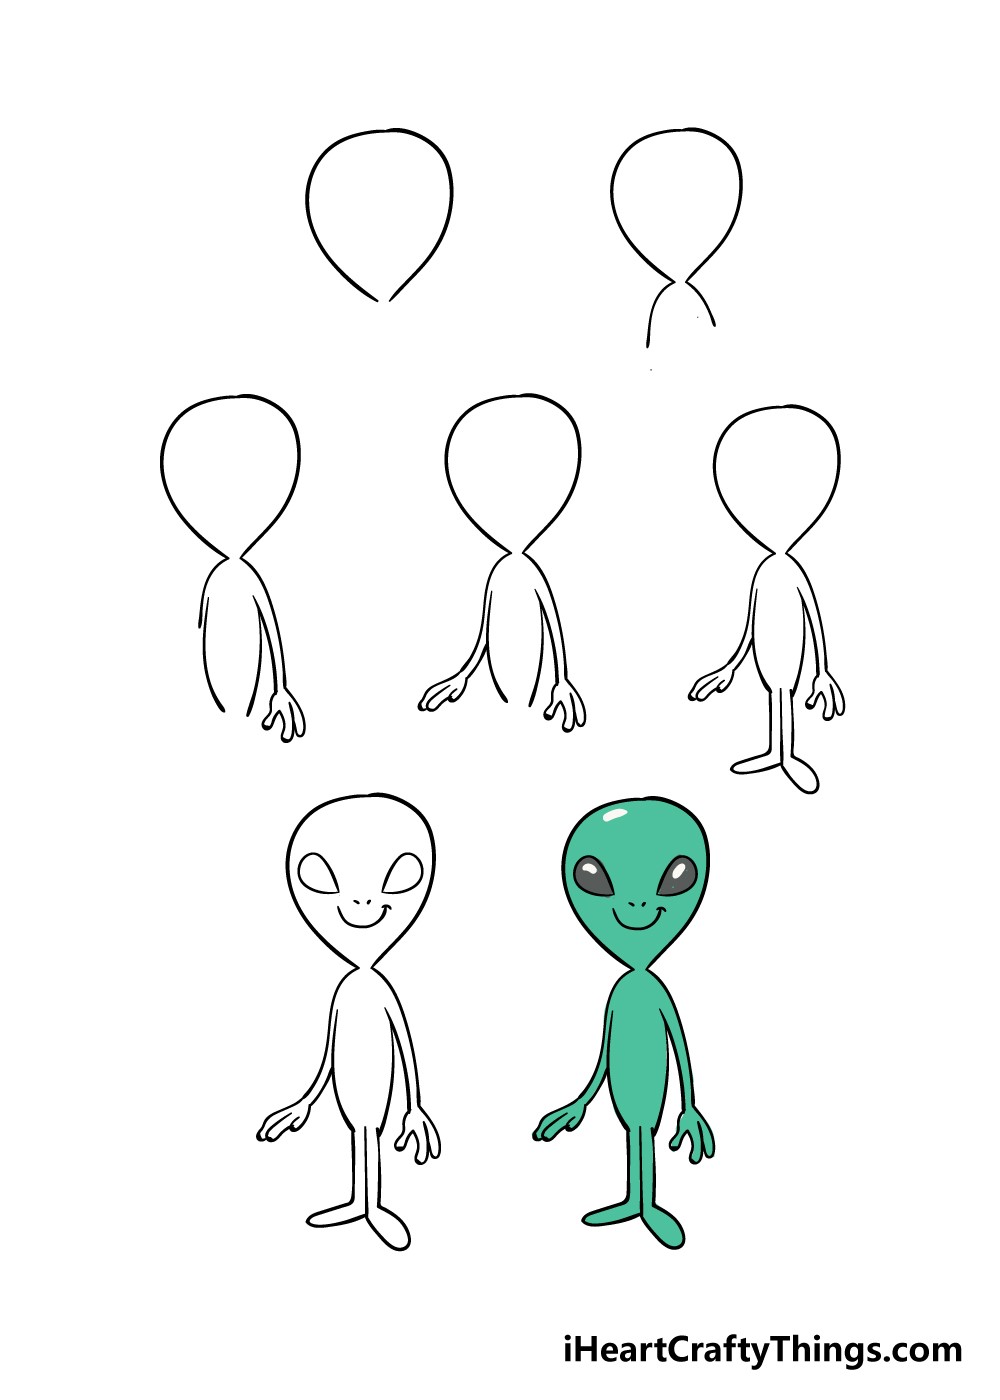 Idée extraterrestre 2 dessin